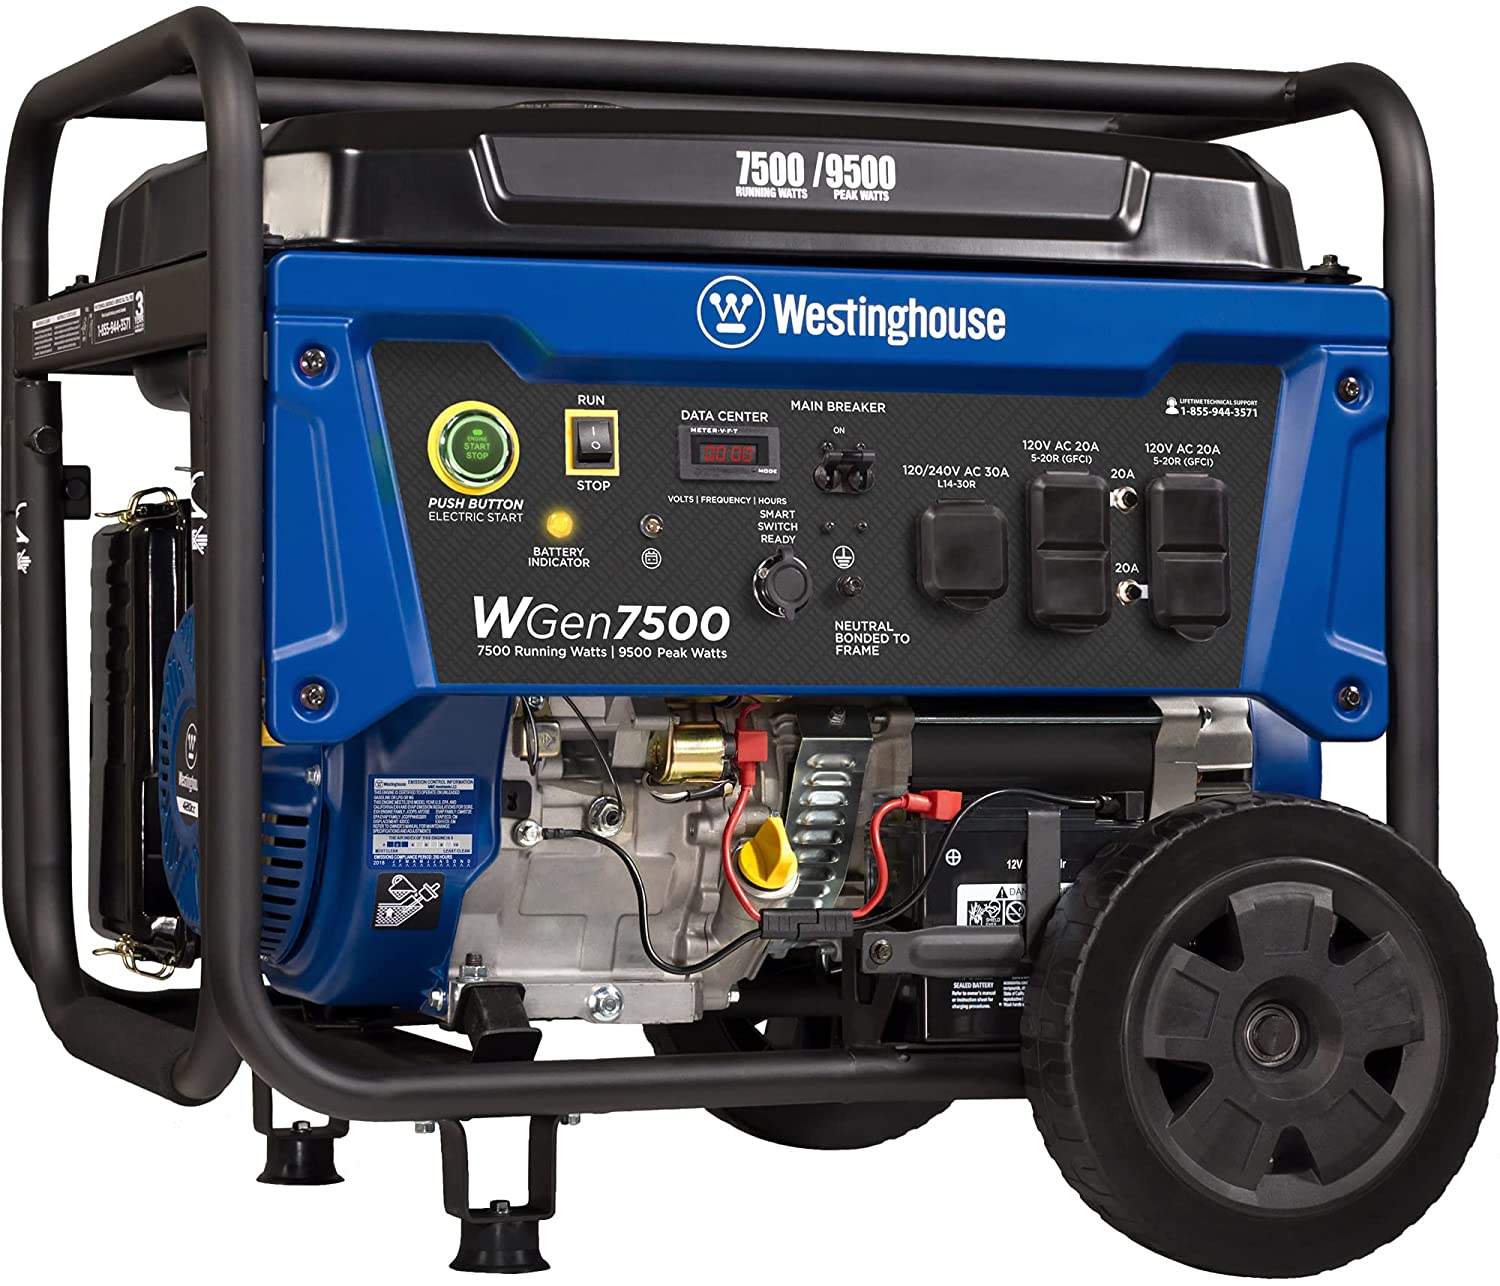 Westinghouse Outdoor Power Equipment WGen7500 Portable Generator